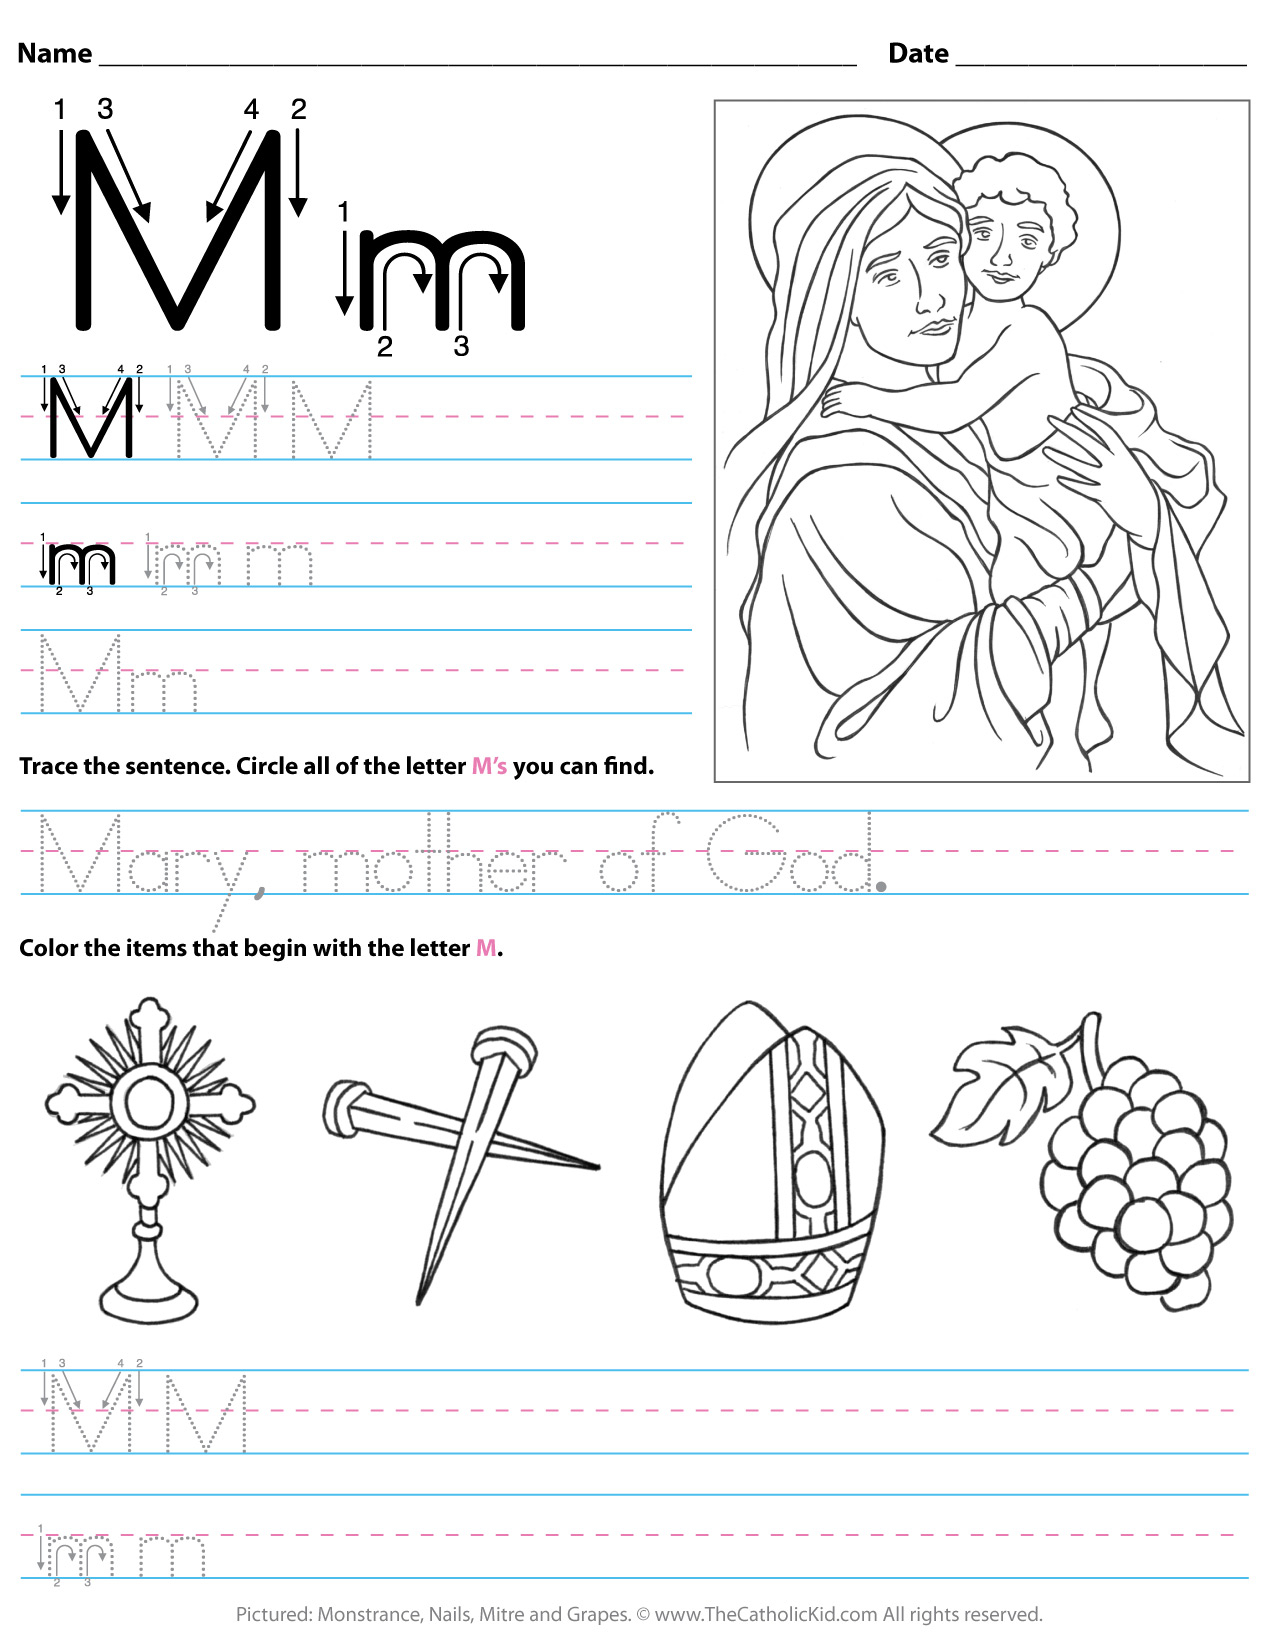 Catholic Alphabet Letter M Worksheet Preschool Kindergarten with Letter M Worksheets For Preschoolers